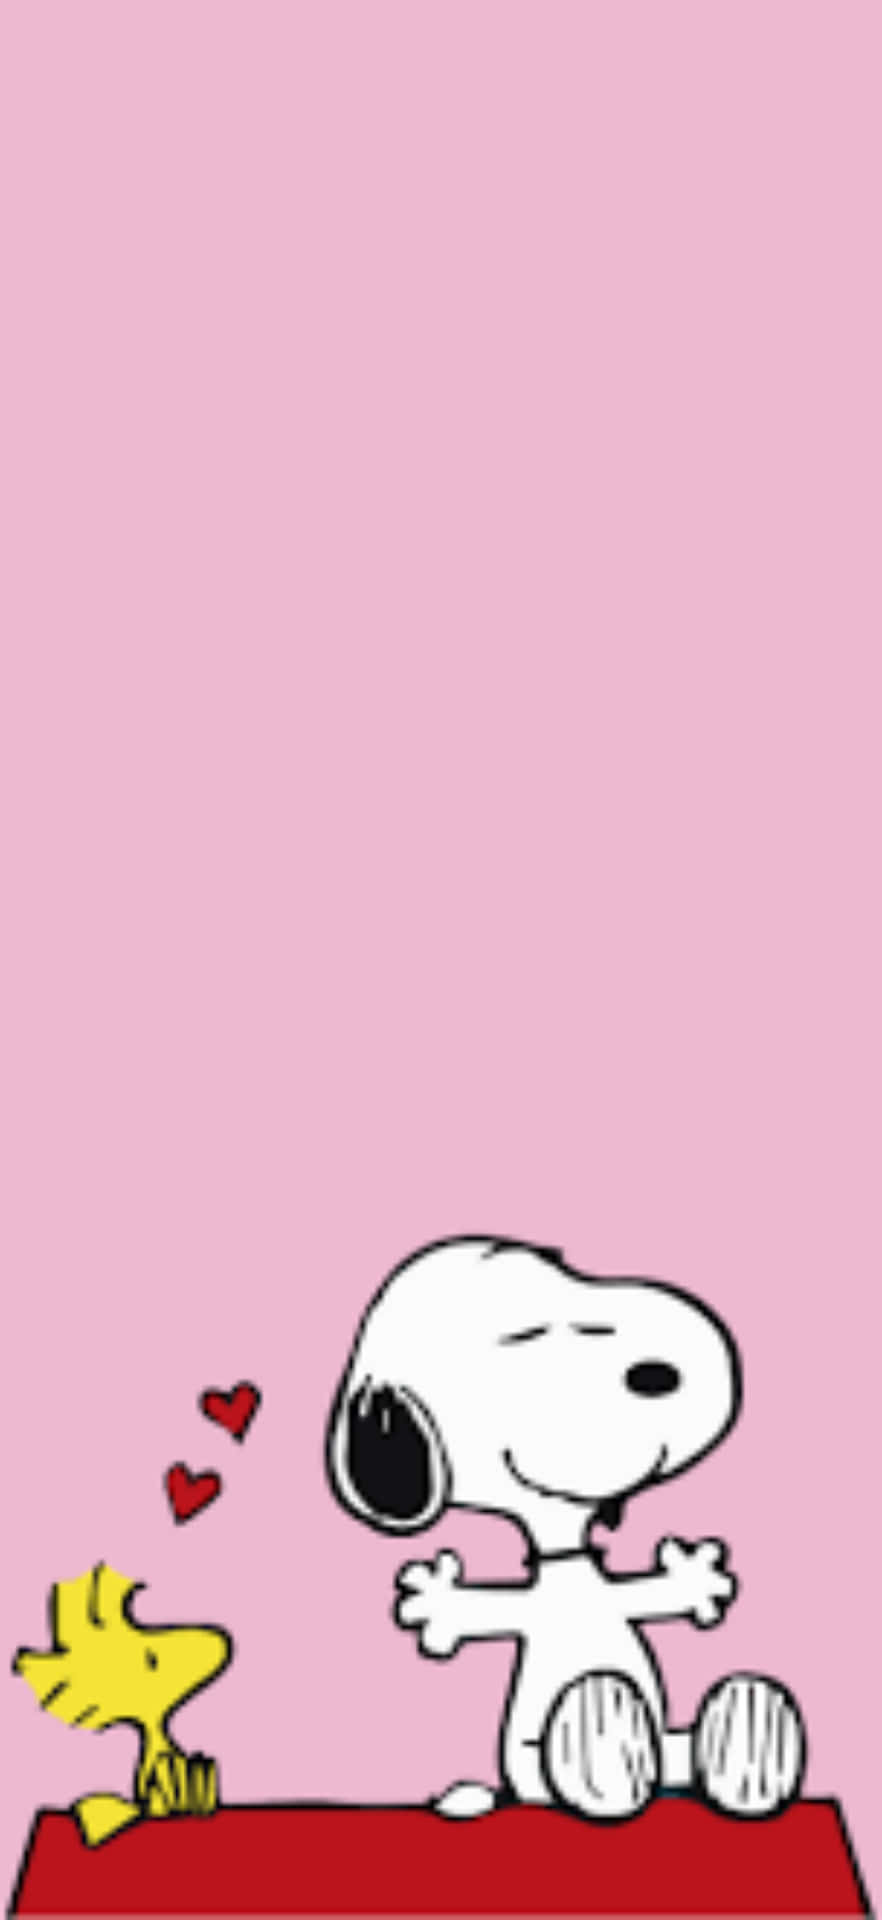 Snoopyfeiert Valentinstag. Wallpaper